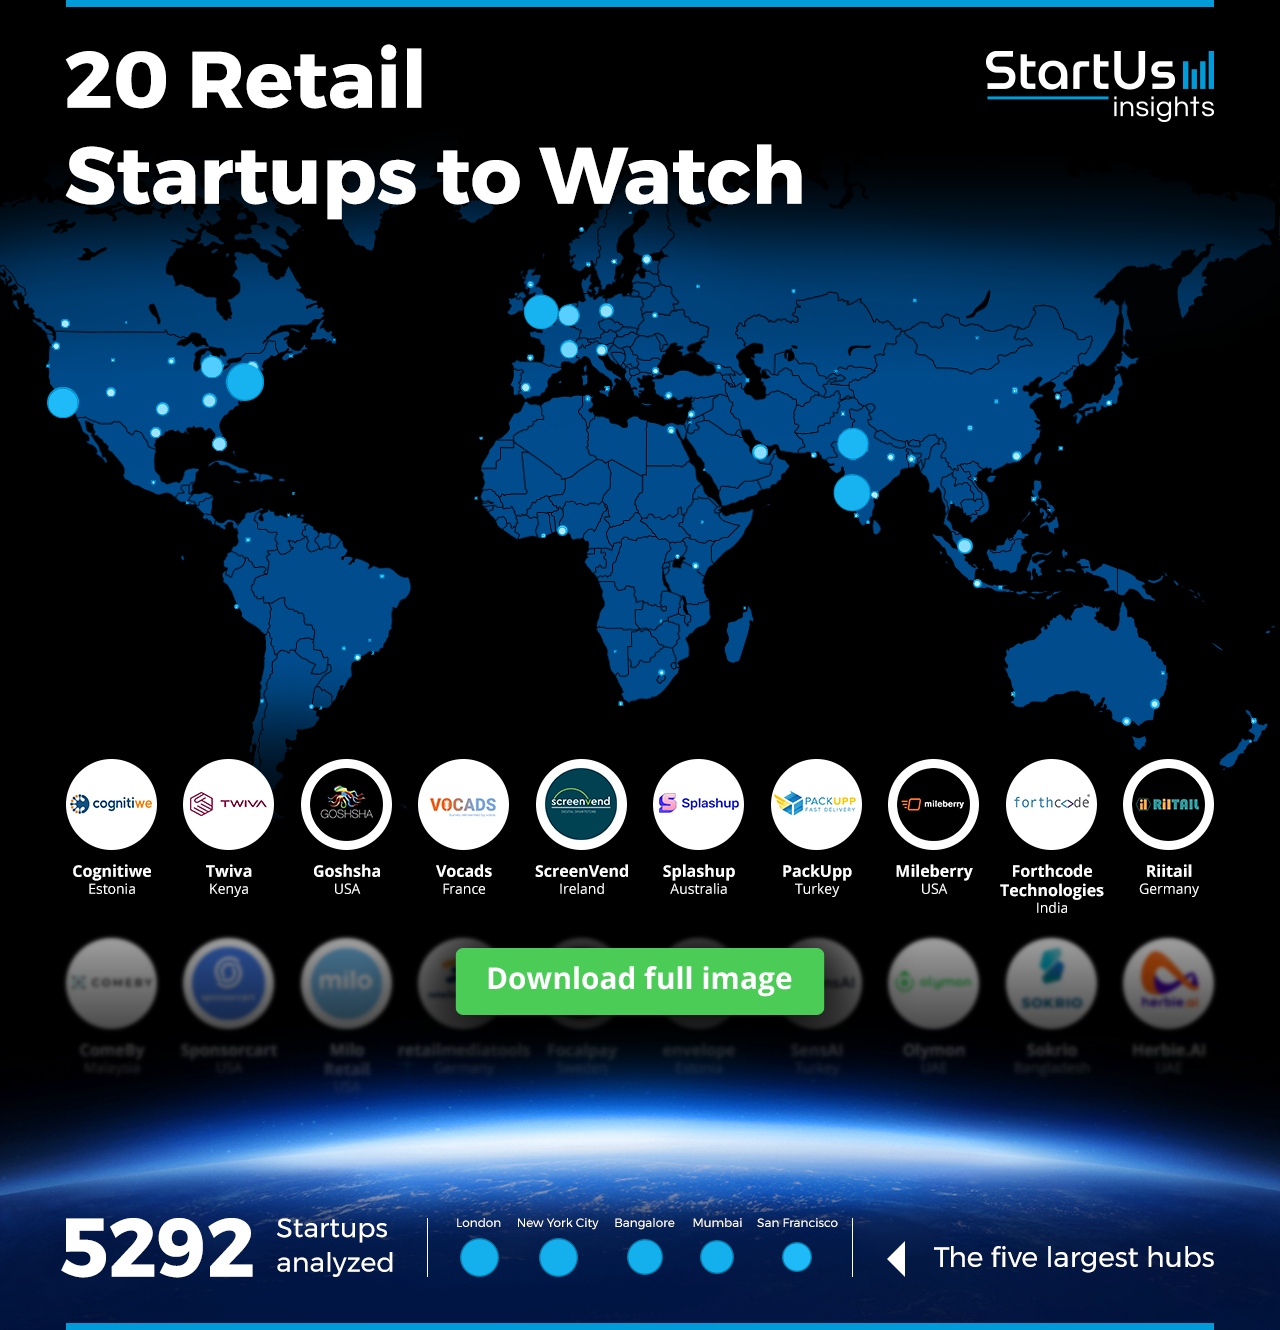 Retail-Startups-to-Watch-Heat-Map-Blurred-StartUs-Insights-noresize